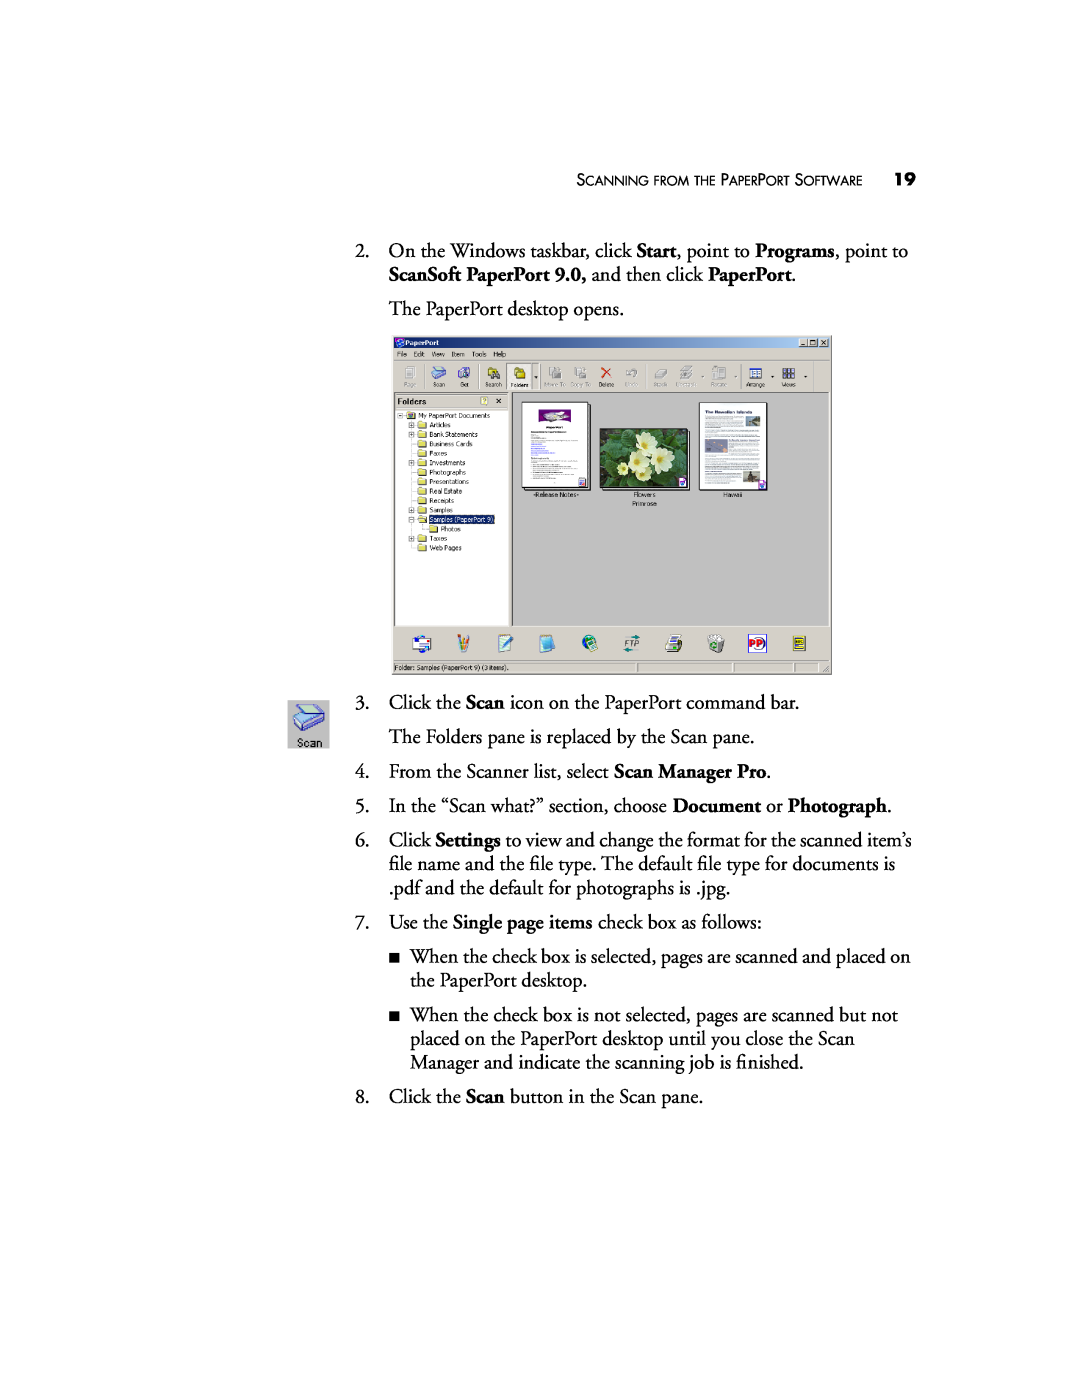 Visioneer 9320 manual The PaperPort desktop opens 